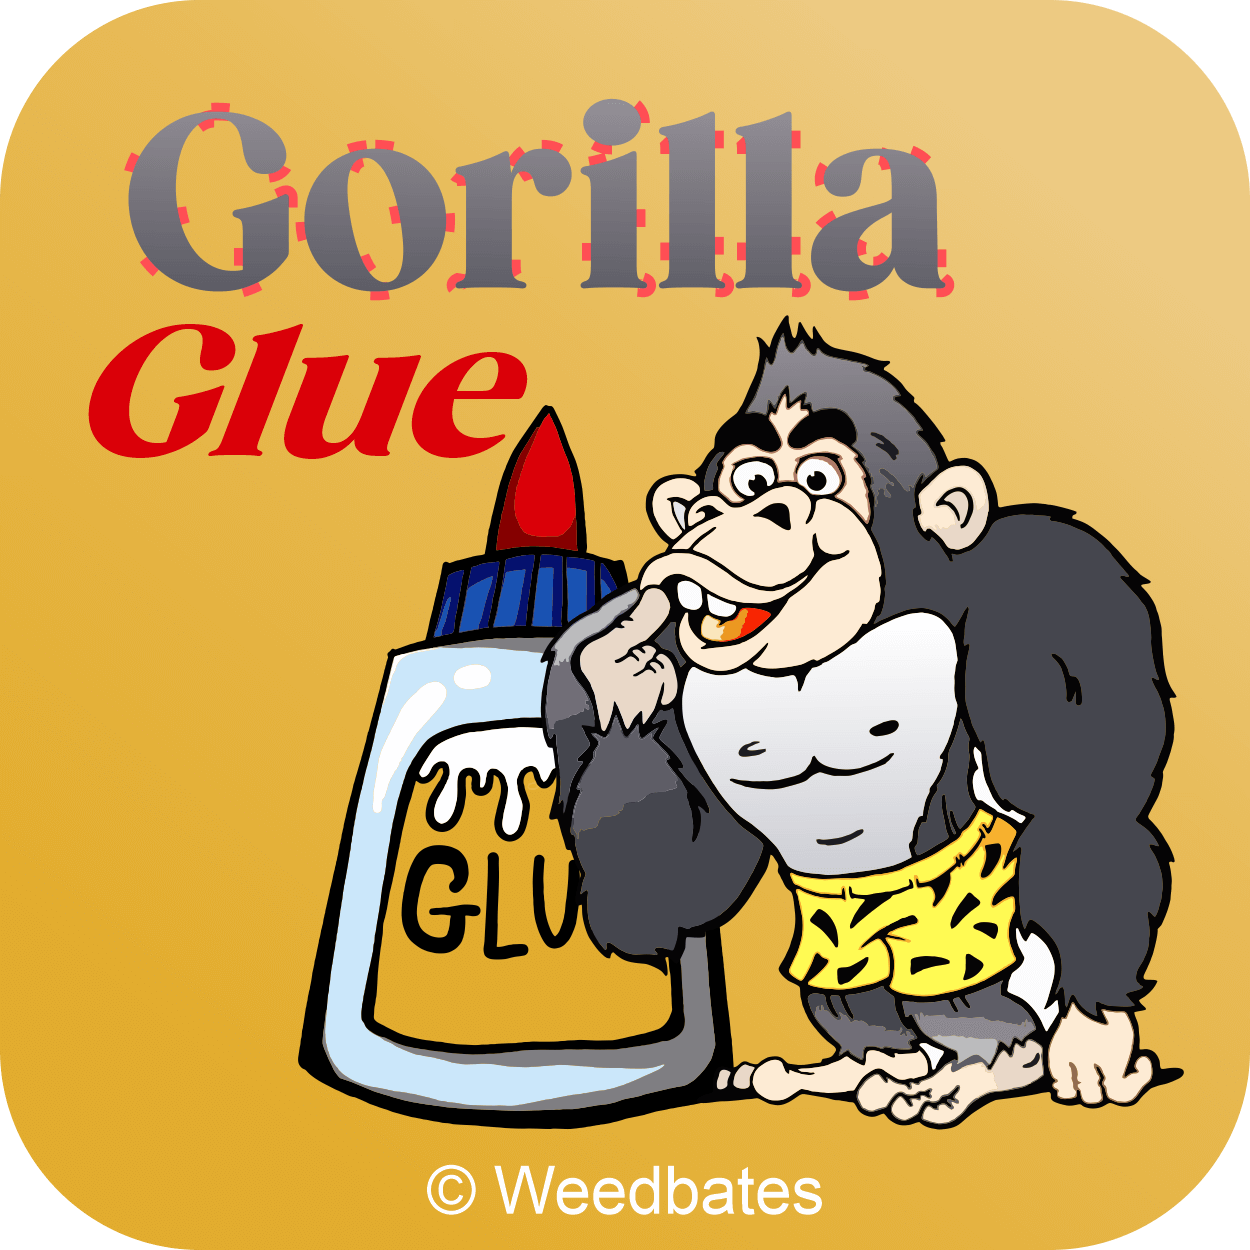 Gorilla Glue strain